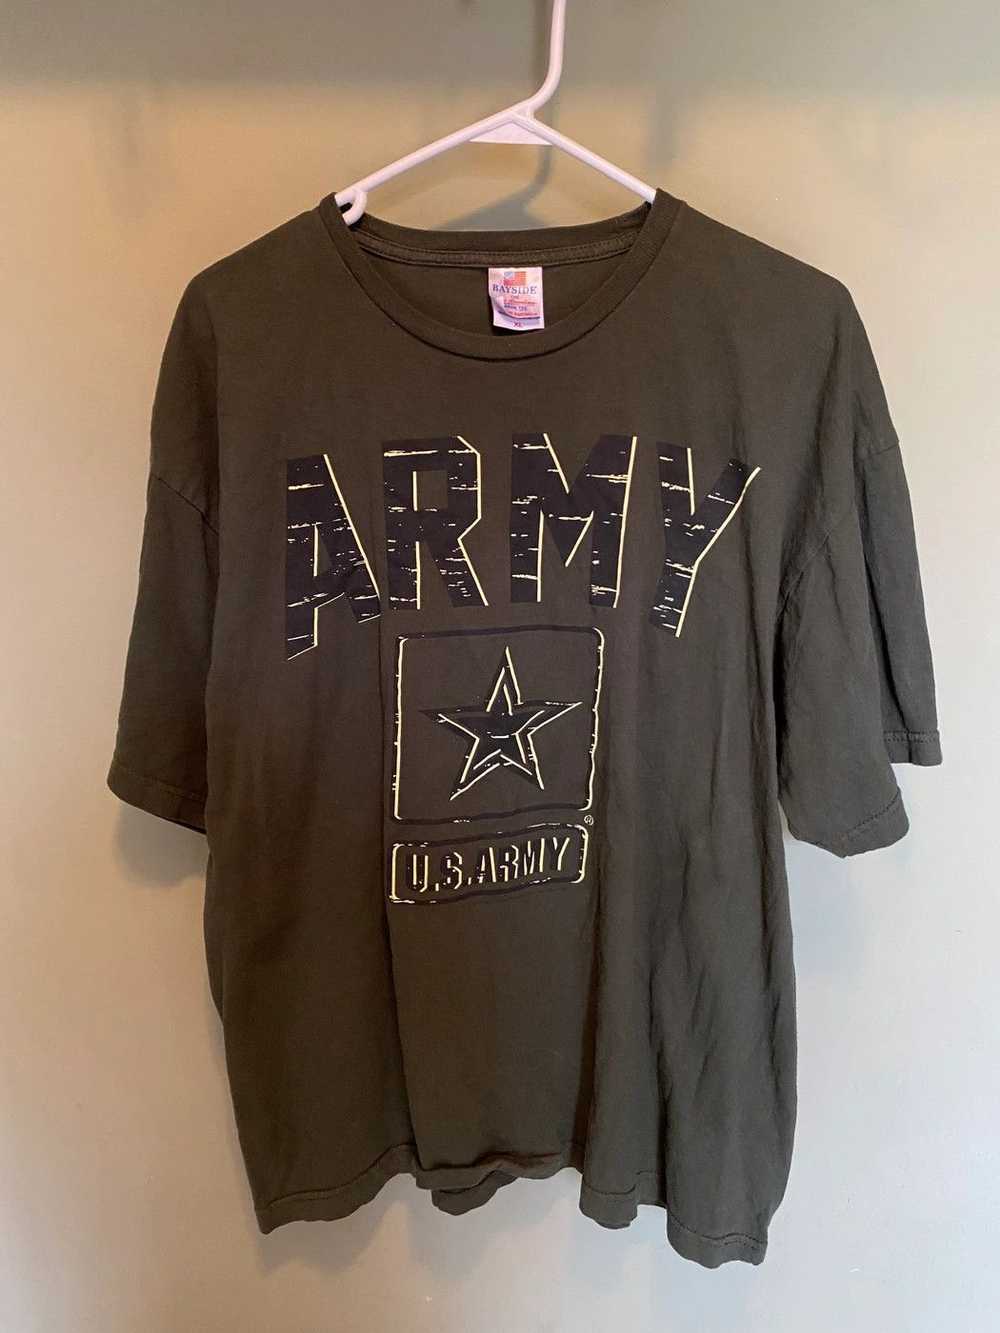 Vintage United States Army T-Shirt - image 1